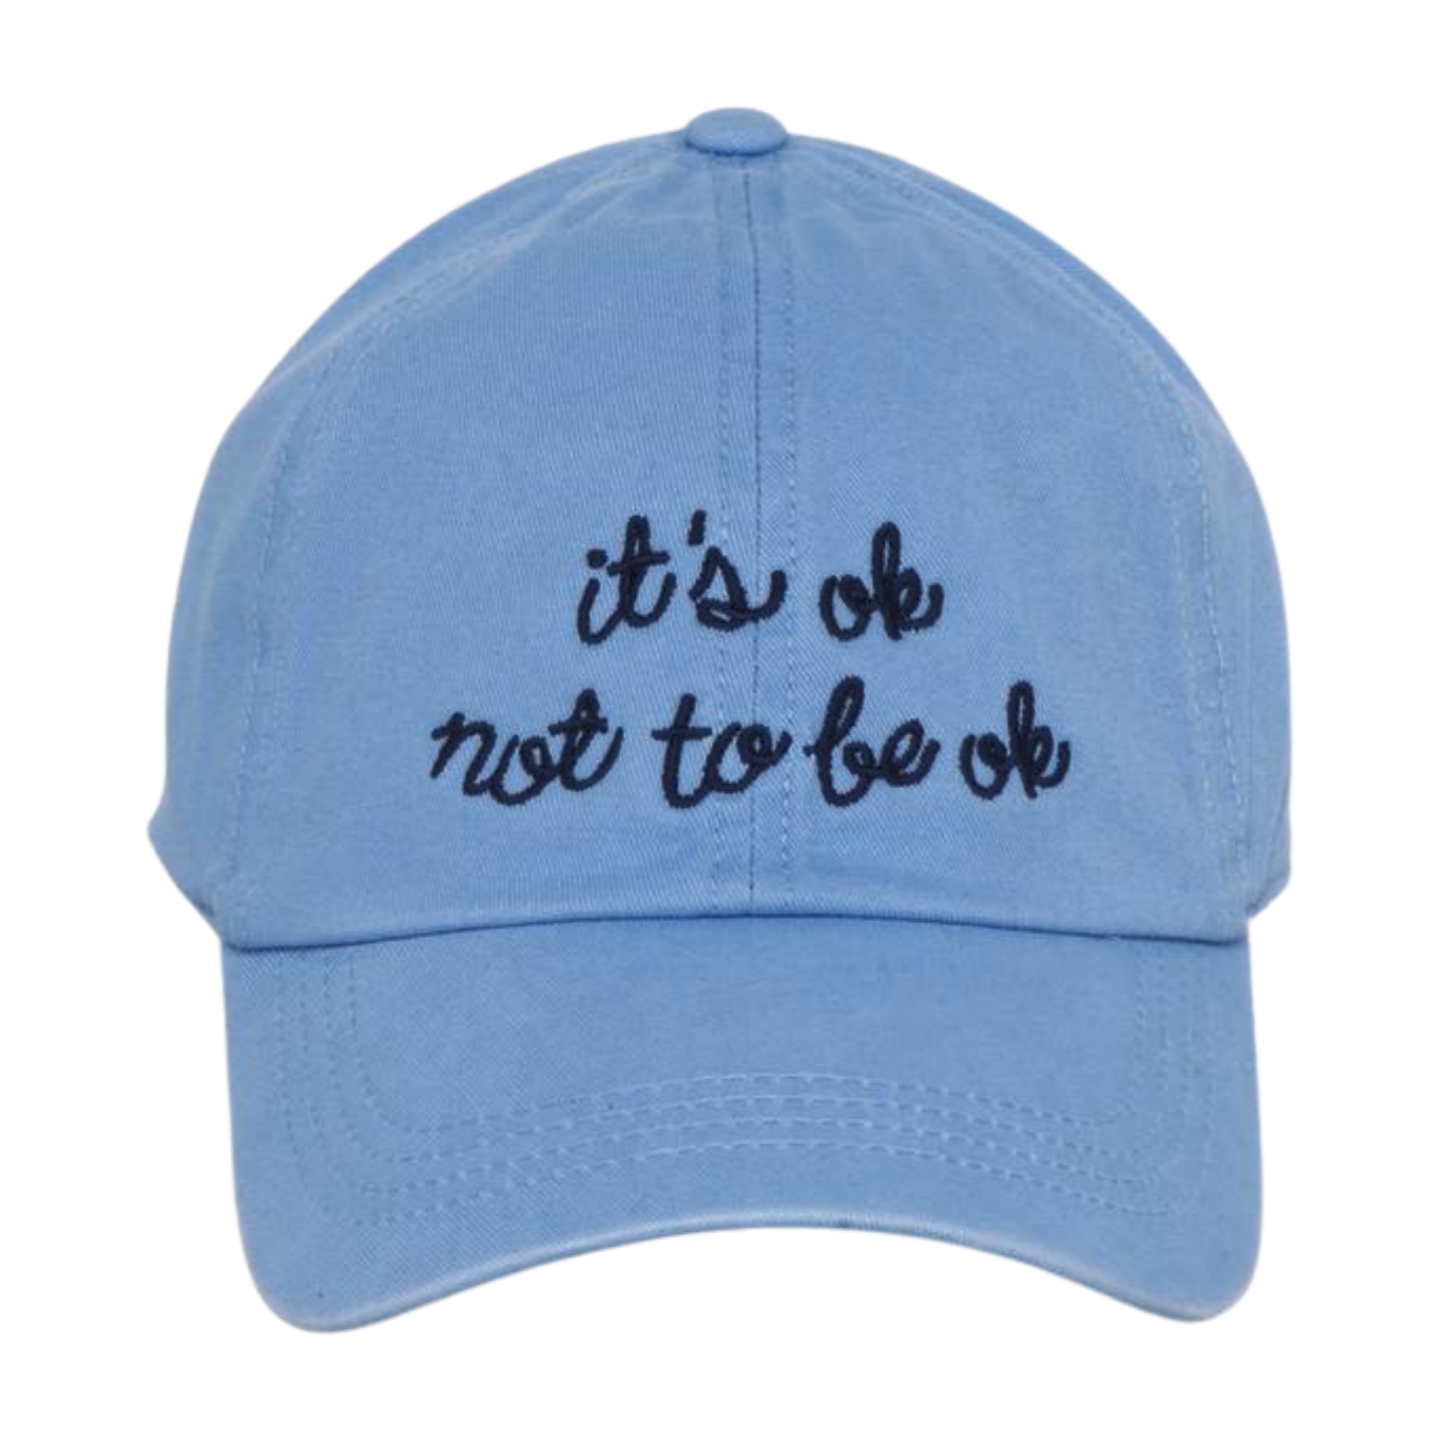 LCAP3472 - "IT'S OK NOT TO BE OK" SELF CARE THEME BASEBALL CAP